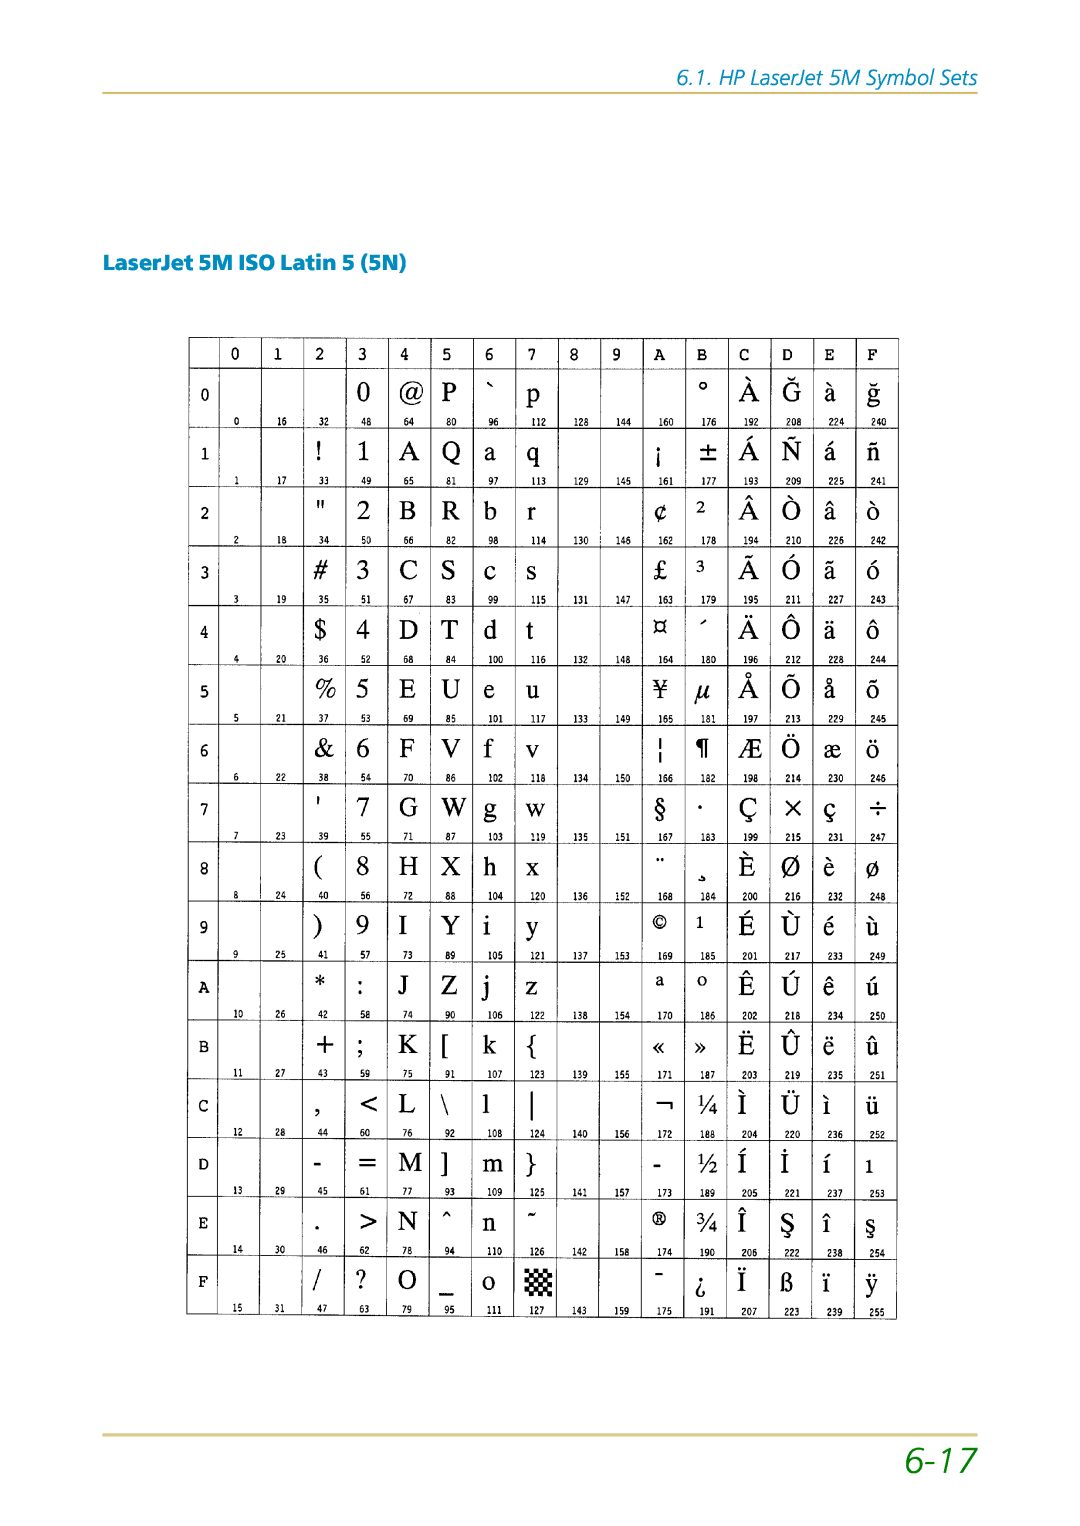 Kyocera FS-1700 user manual 6-17, HP LaserJet 5M Symbol Sets, LaserJet 5M ISO Latin 5 5N 